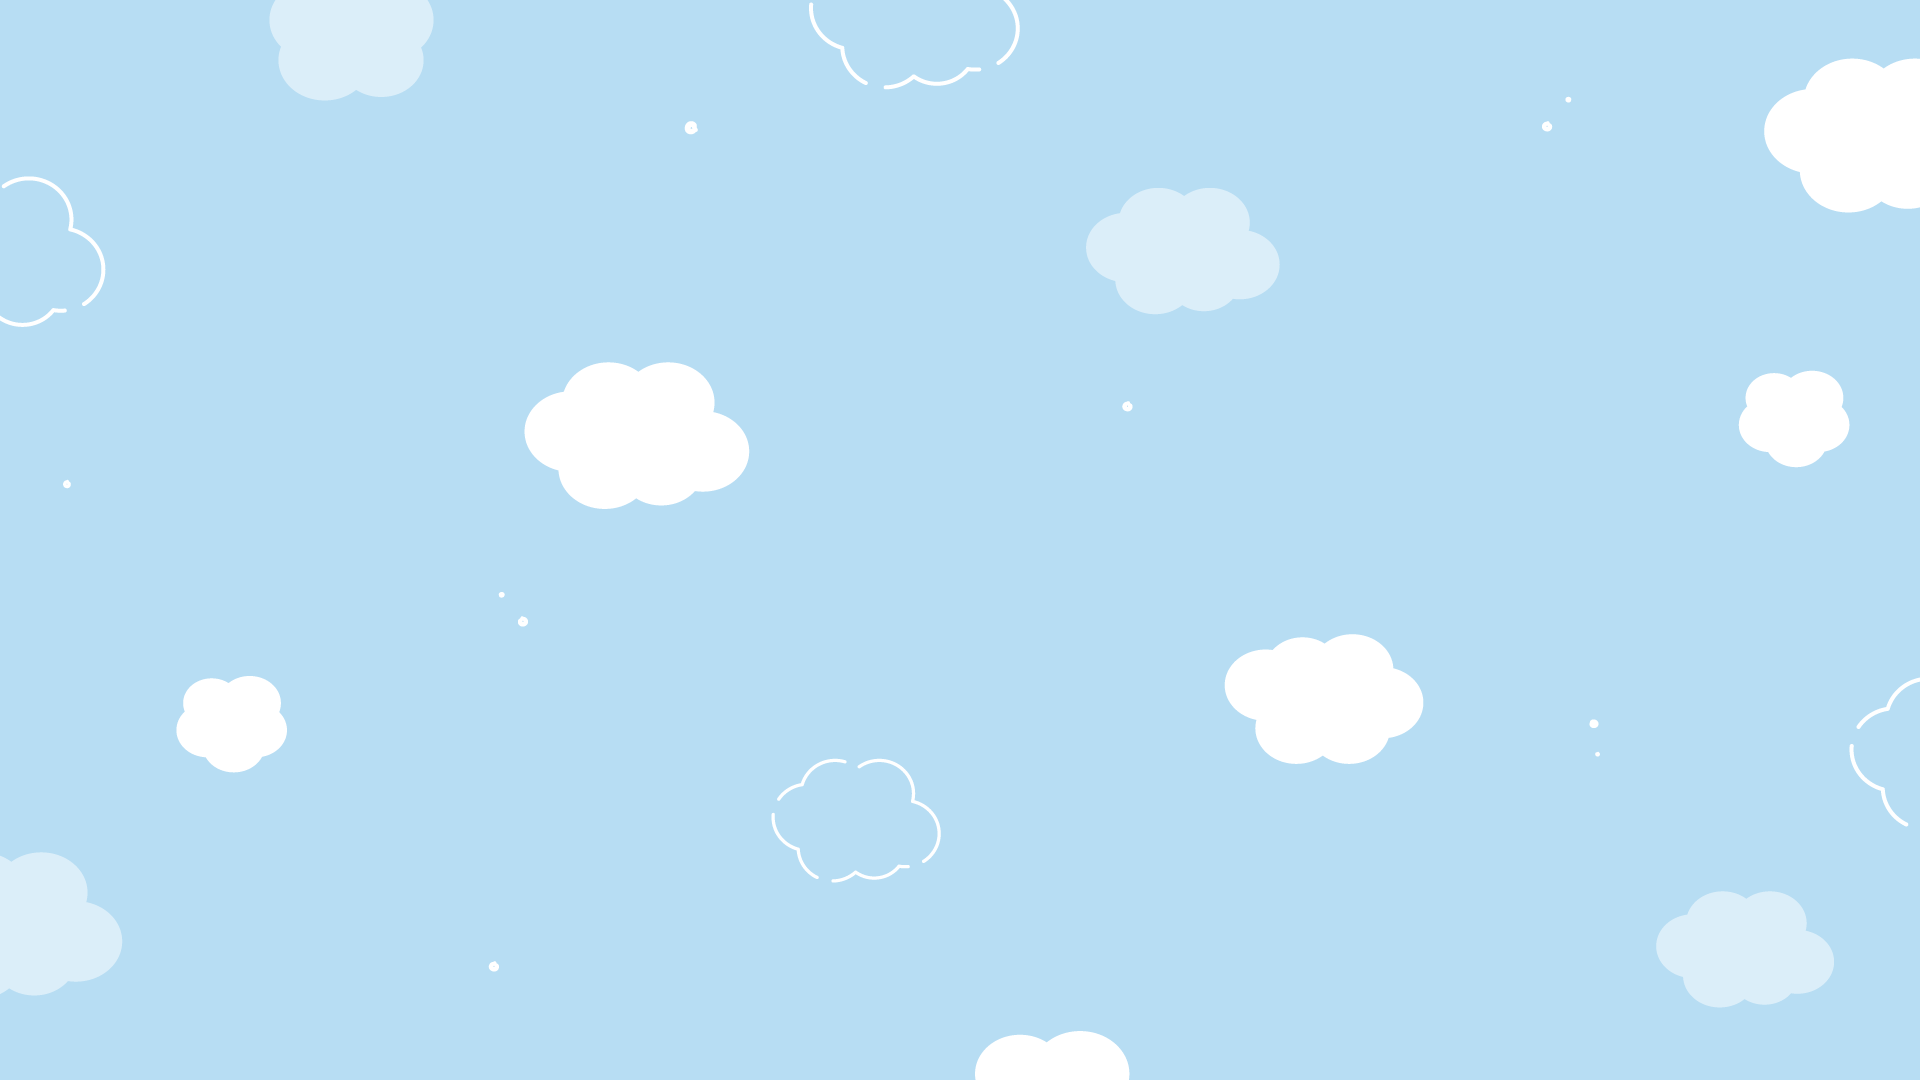 Twitter 上的 Okumono 背景 動画フリー素材 New かわいい雲の柄背景 11種 T Co Cvknhjufrg ゆるく手書き風な雲の浮かぶ背景素材です シンプルなのでいろいろな場面で使えそう Okumono フリー素材 Vtuber T Co Koo0gkkrsg Twitter